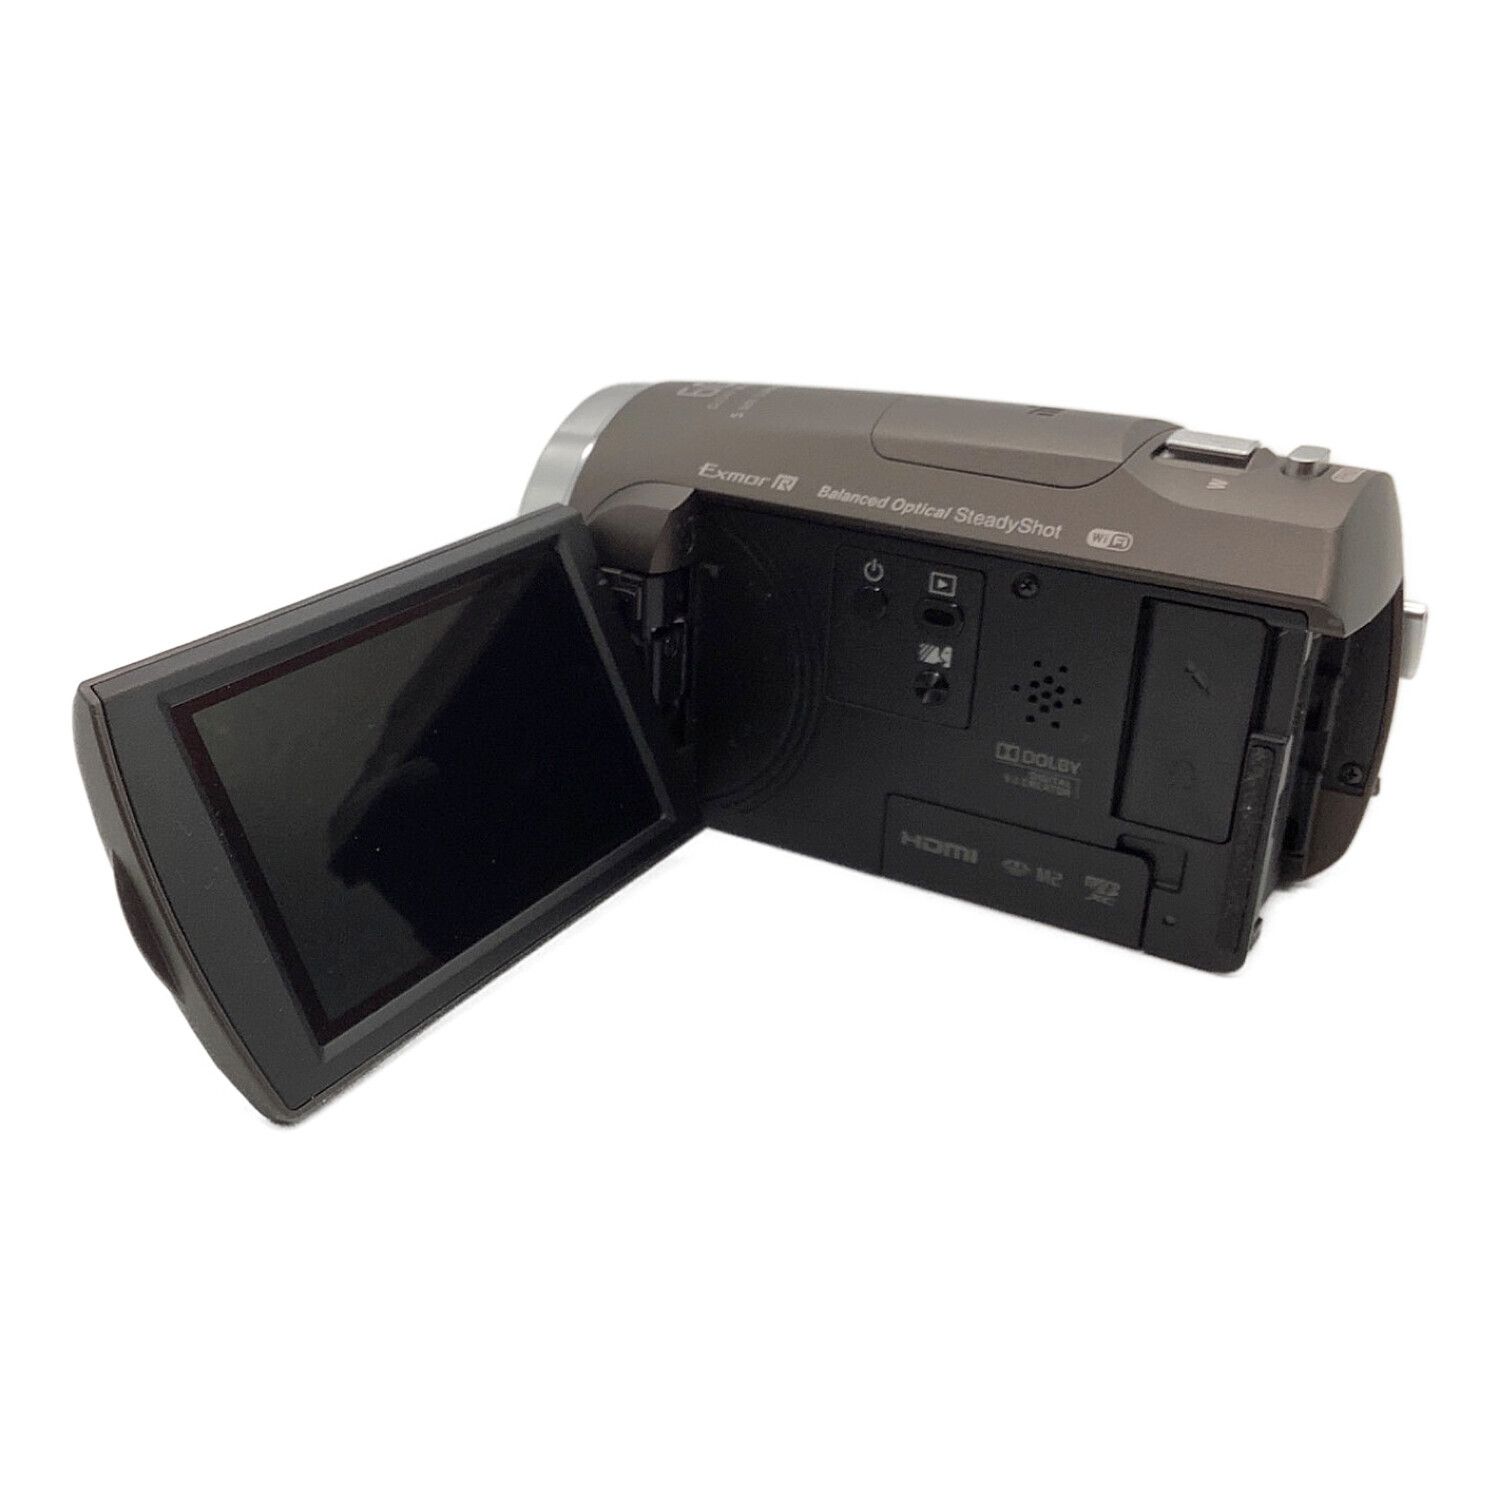 SONY (ソニー) デジタルビデオカメラ 229万画素 SDカード対応 HDR 